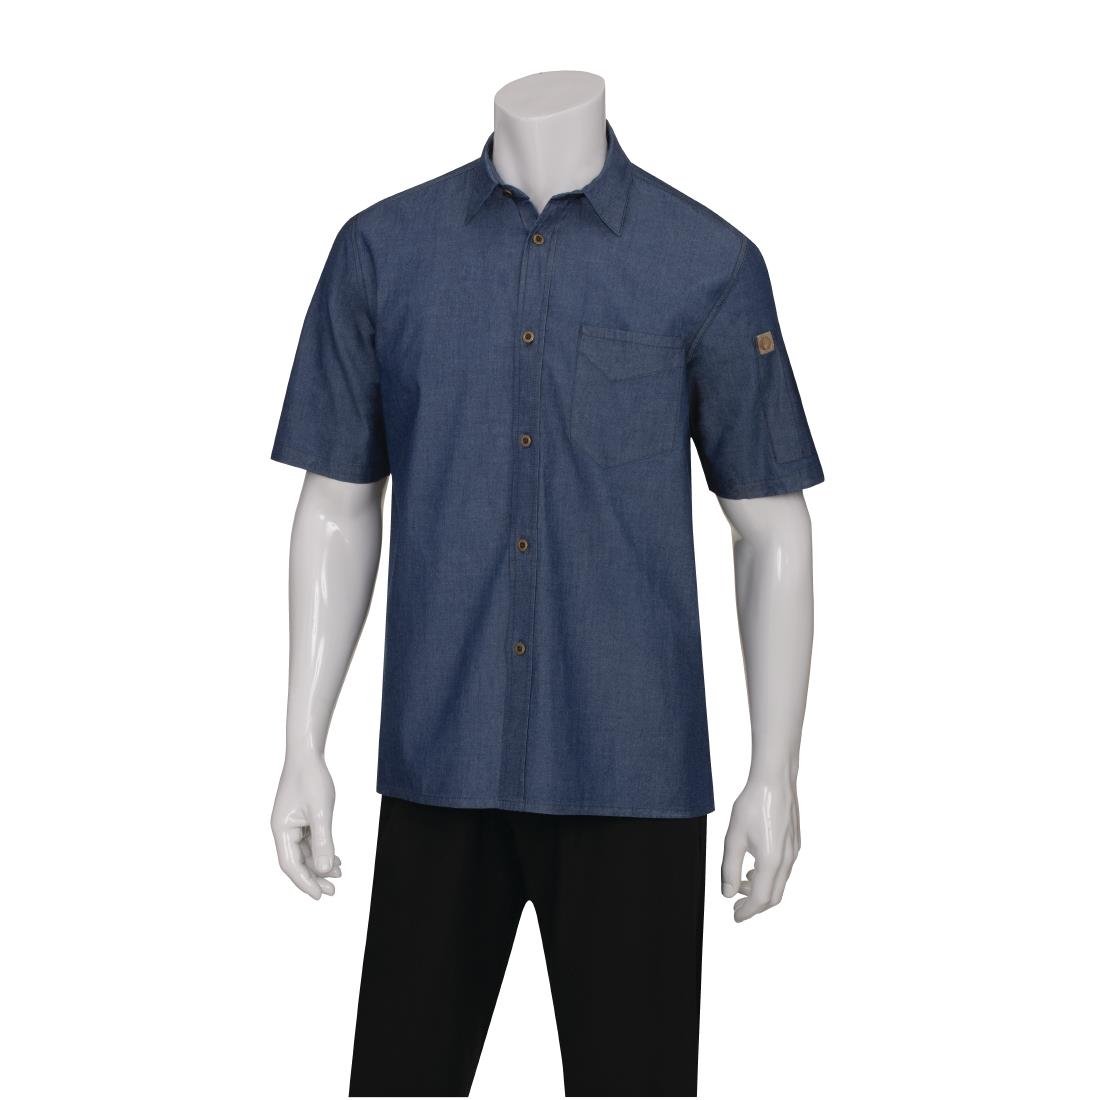 B074-S Chef Works Detroit Unisex Denim Shirt Short Sleeve Blue S